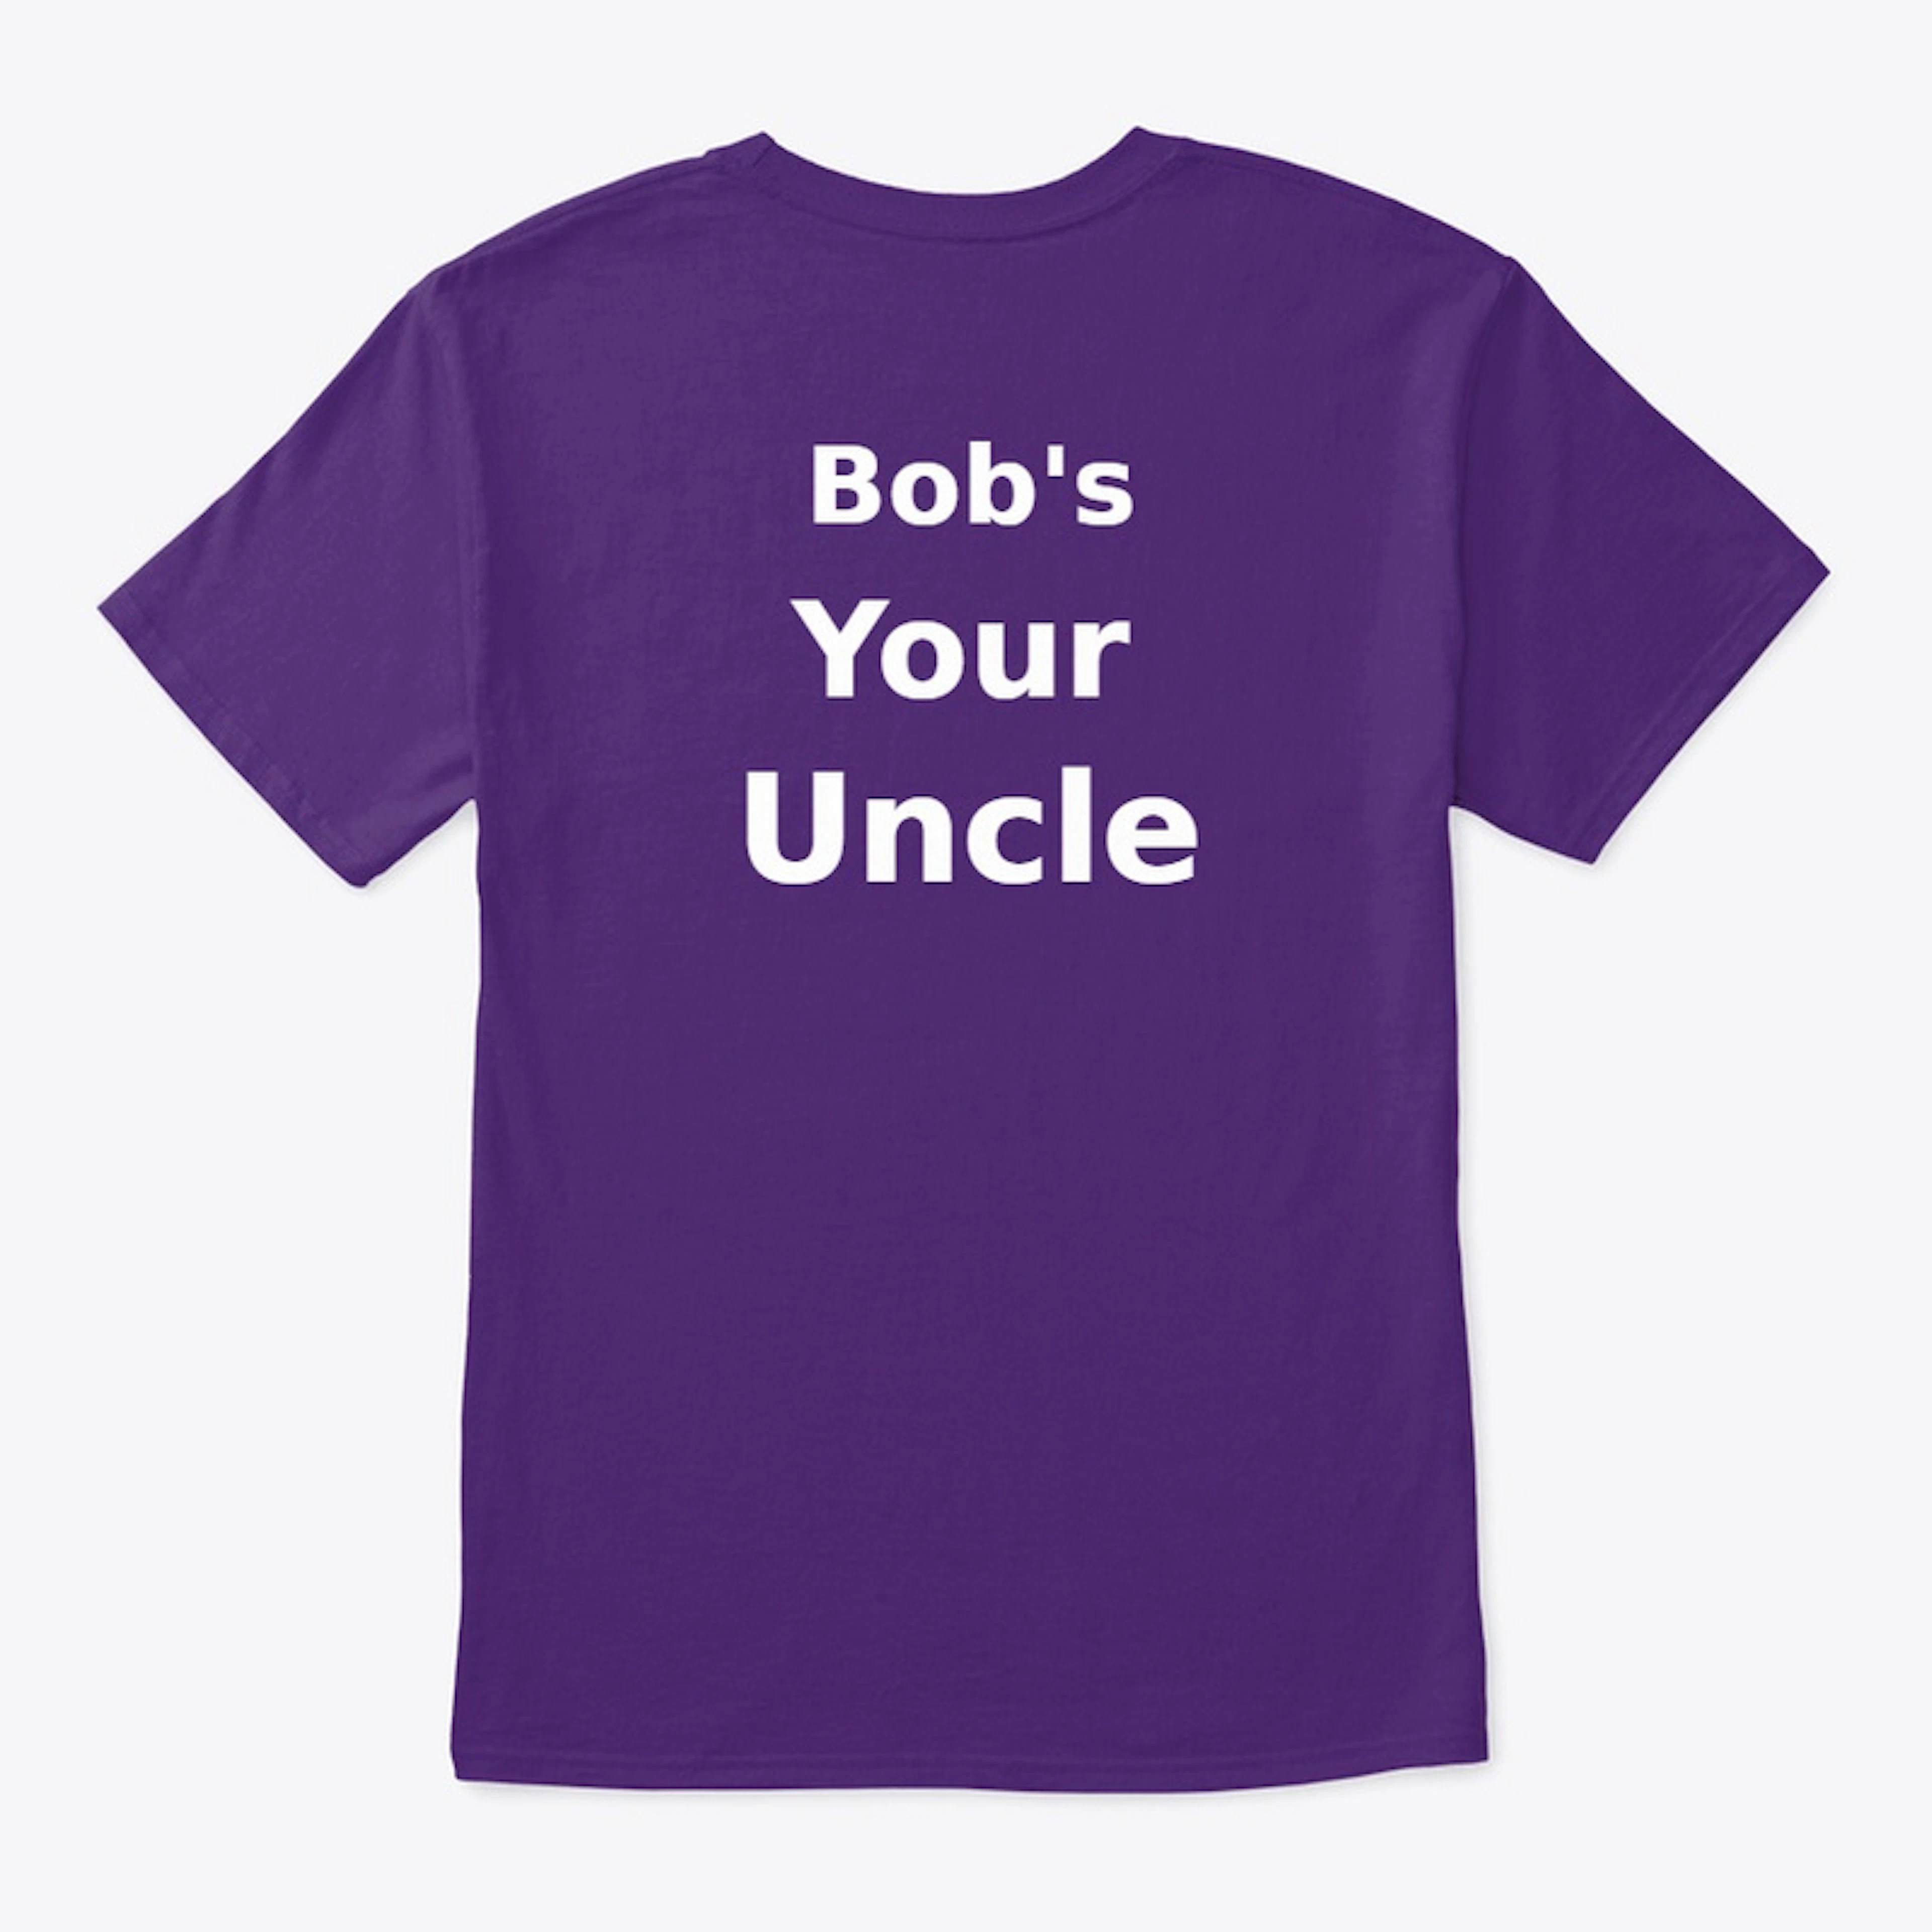 Bob's your Uncle